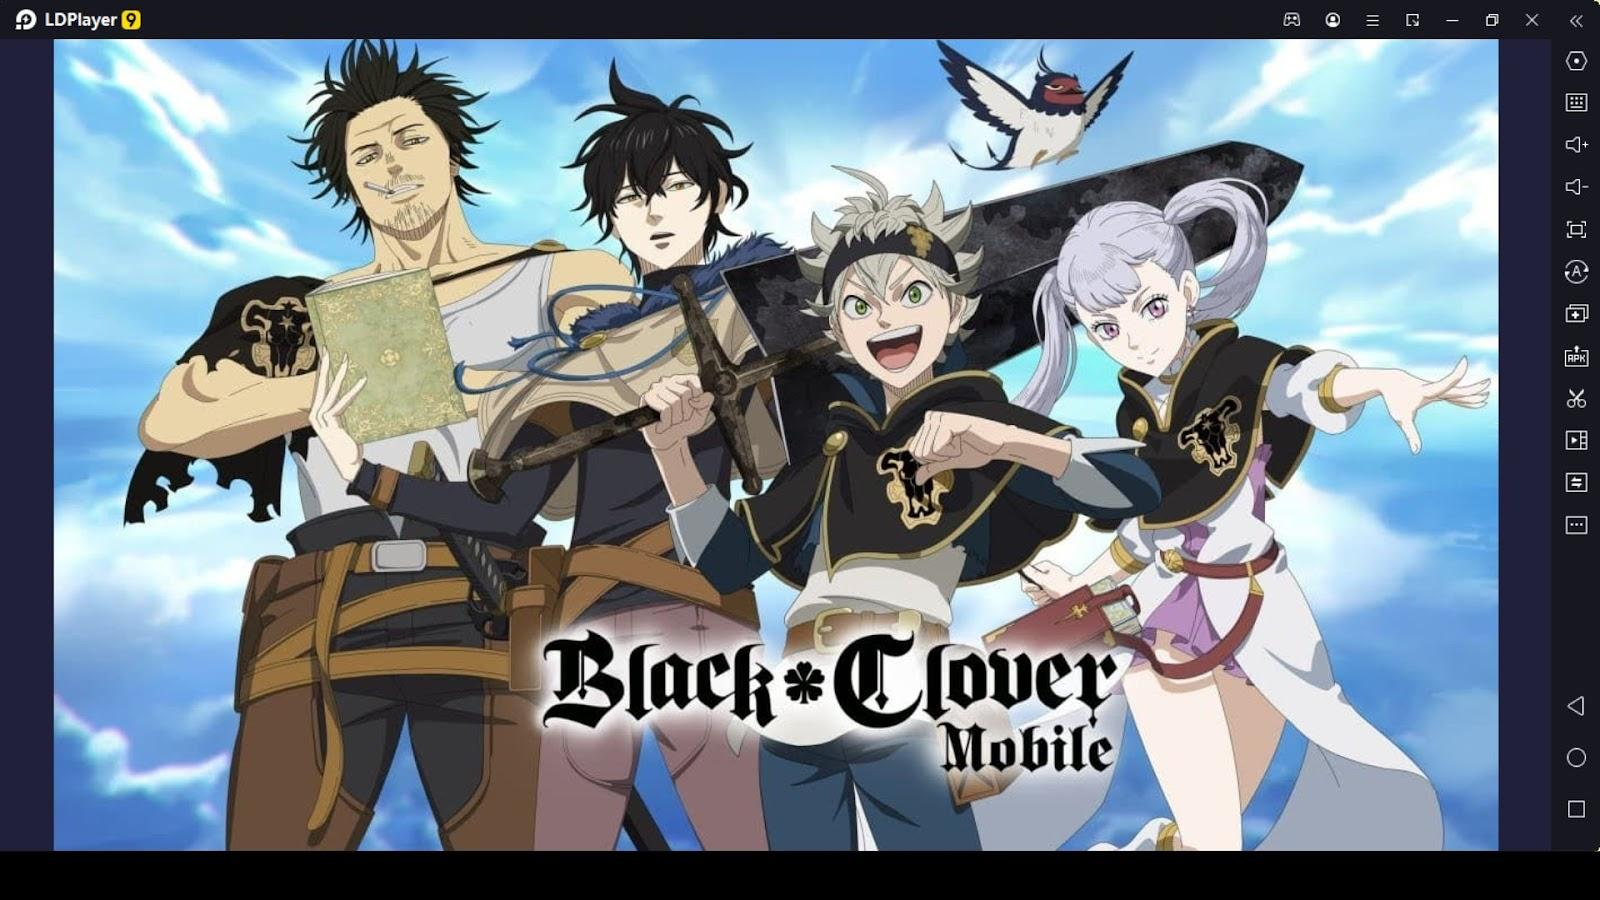 Black Clover Mobile release date